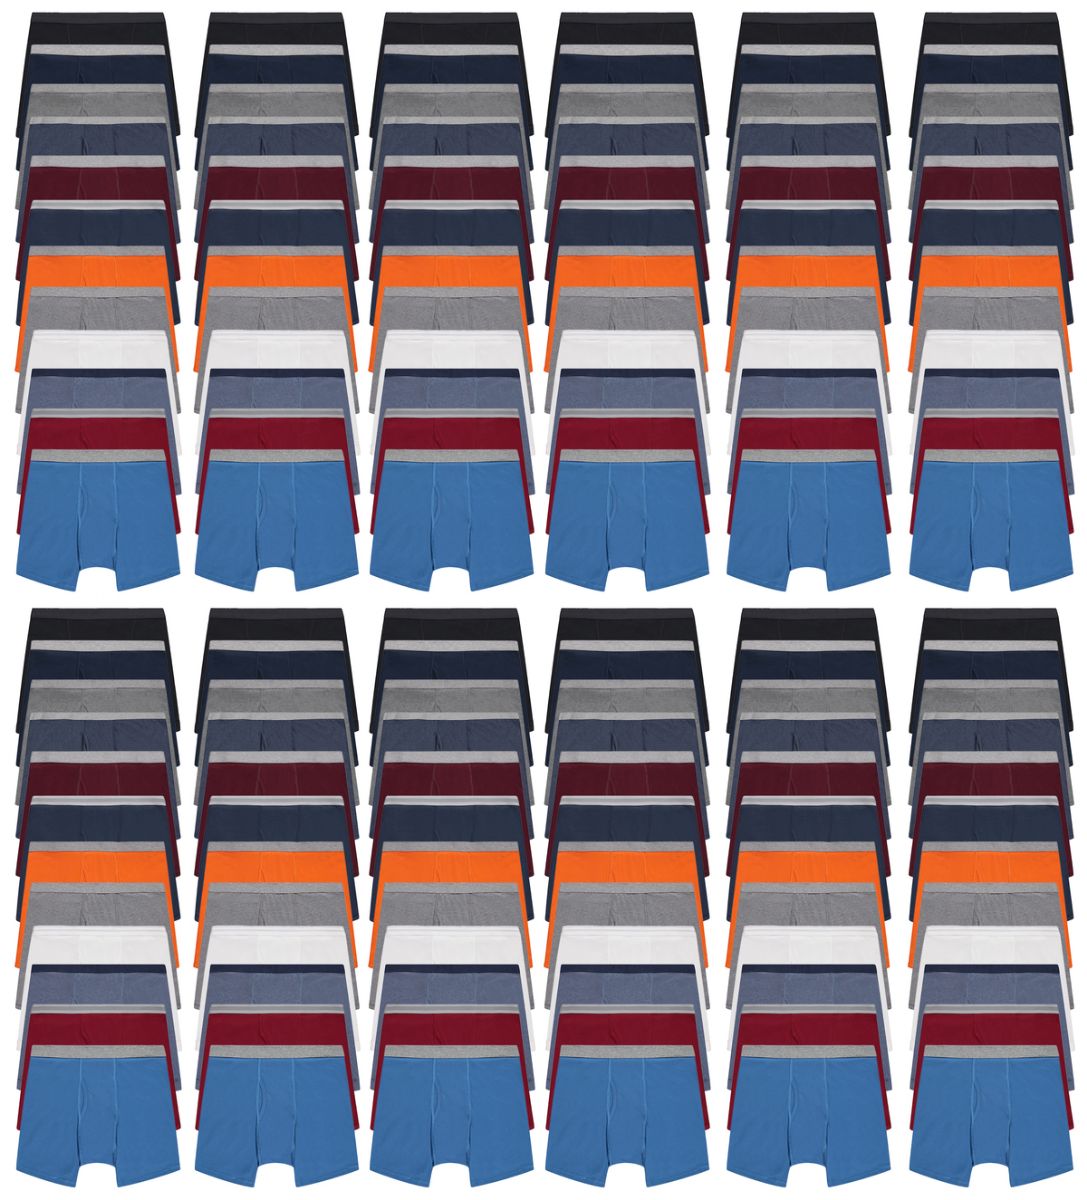 144 Pieces of Mens 100% Cotton Boxer Briefs Underwear Assorted Colors, Size 3X-Large, 144 Pack